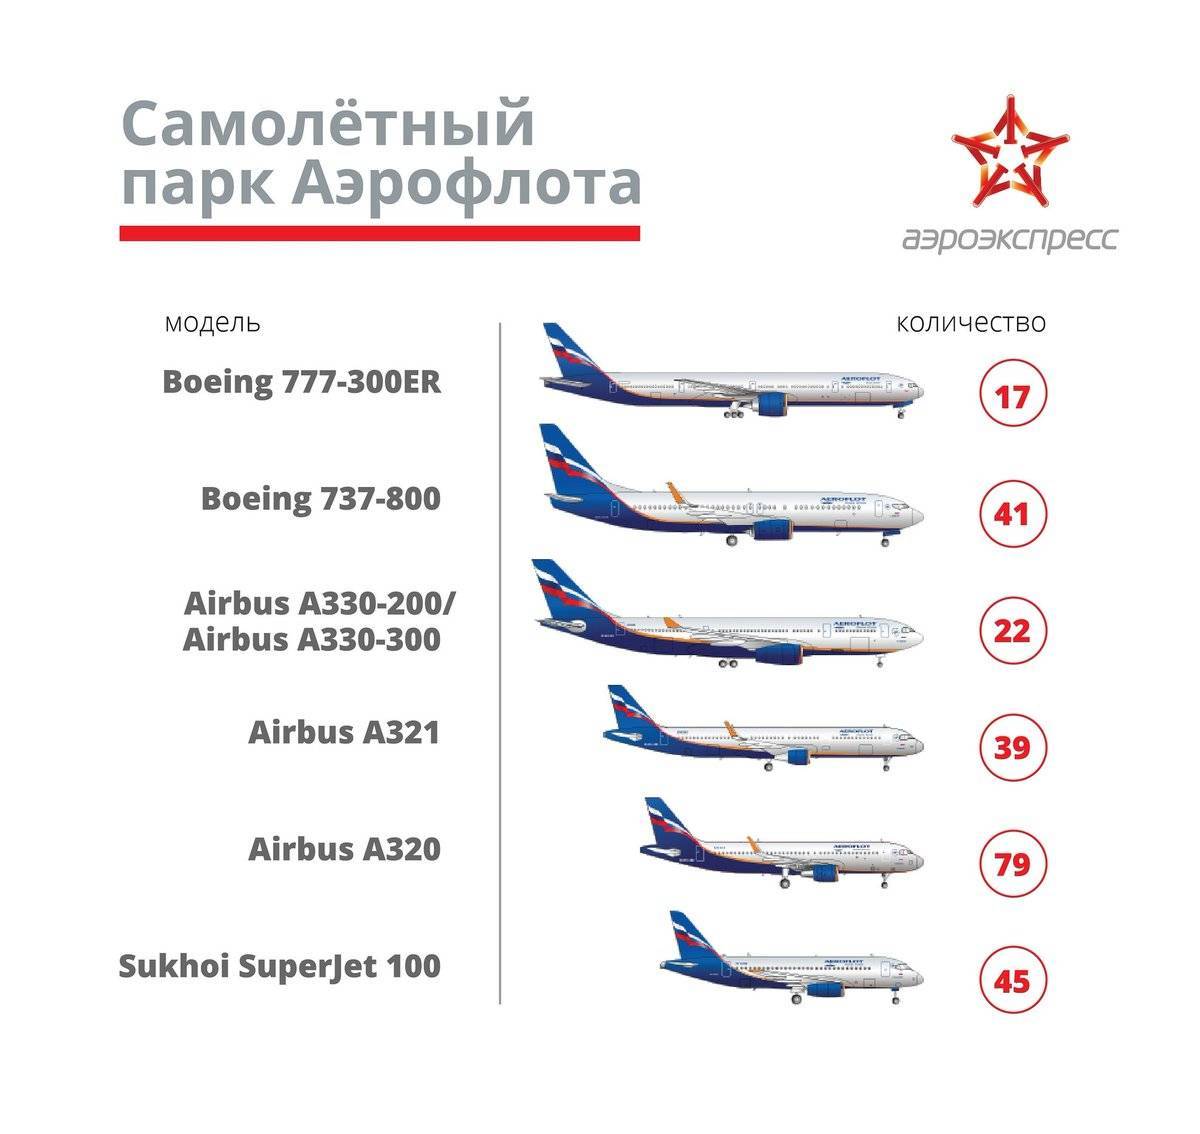 Авиапарк аэрофлота: модели, количество и возраст самолетов авиакомпании